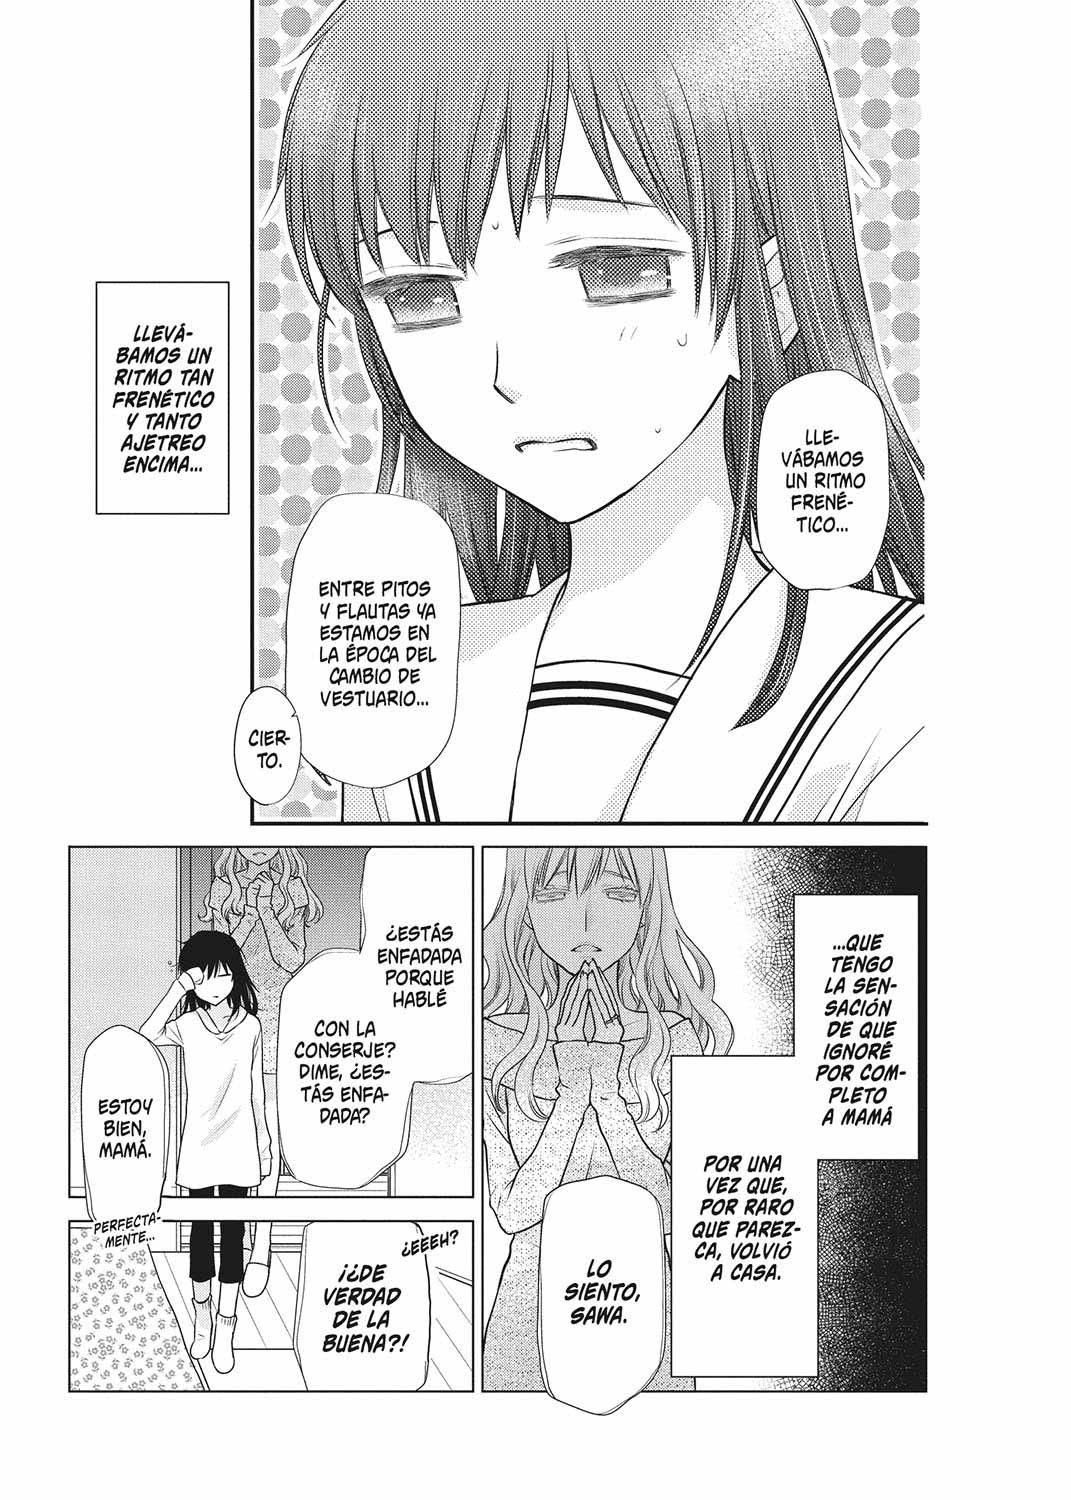 Skye's Scribblings: Manga Review: Fruits Basket Series (Natsuki